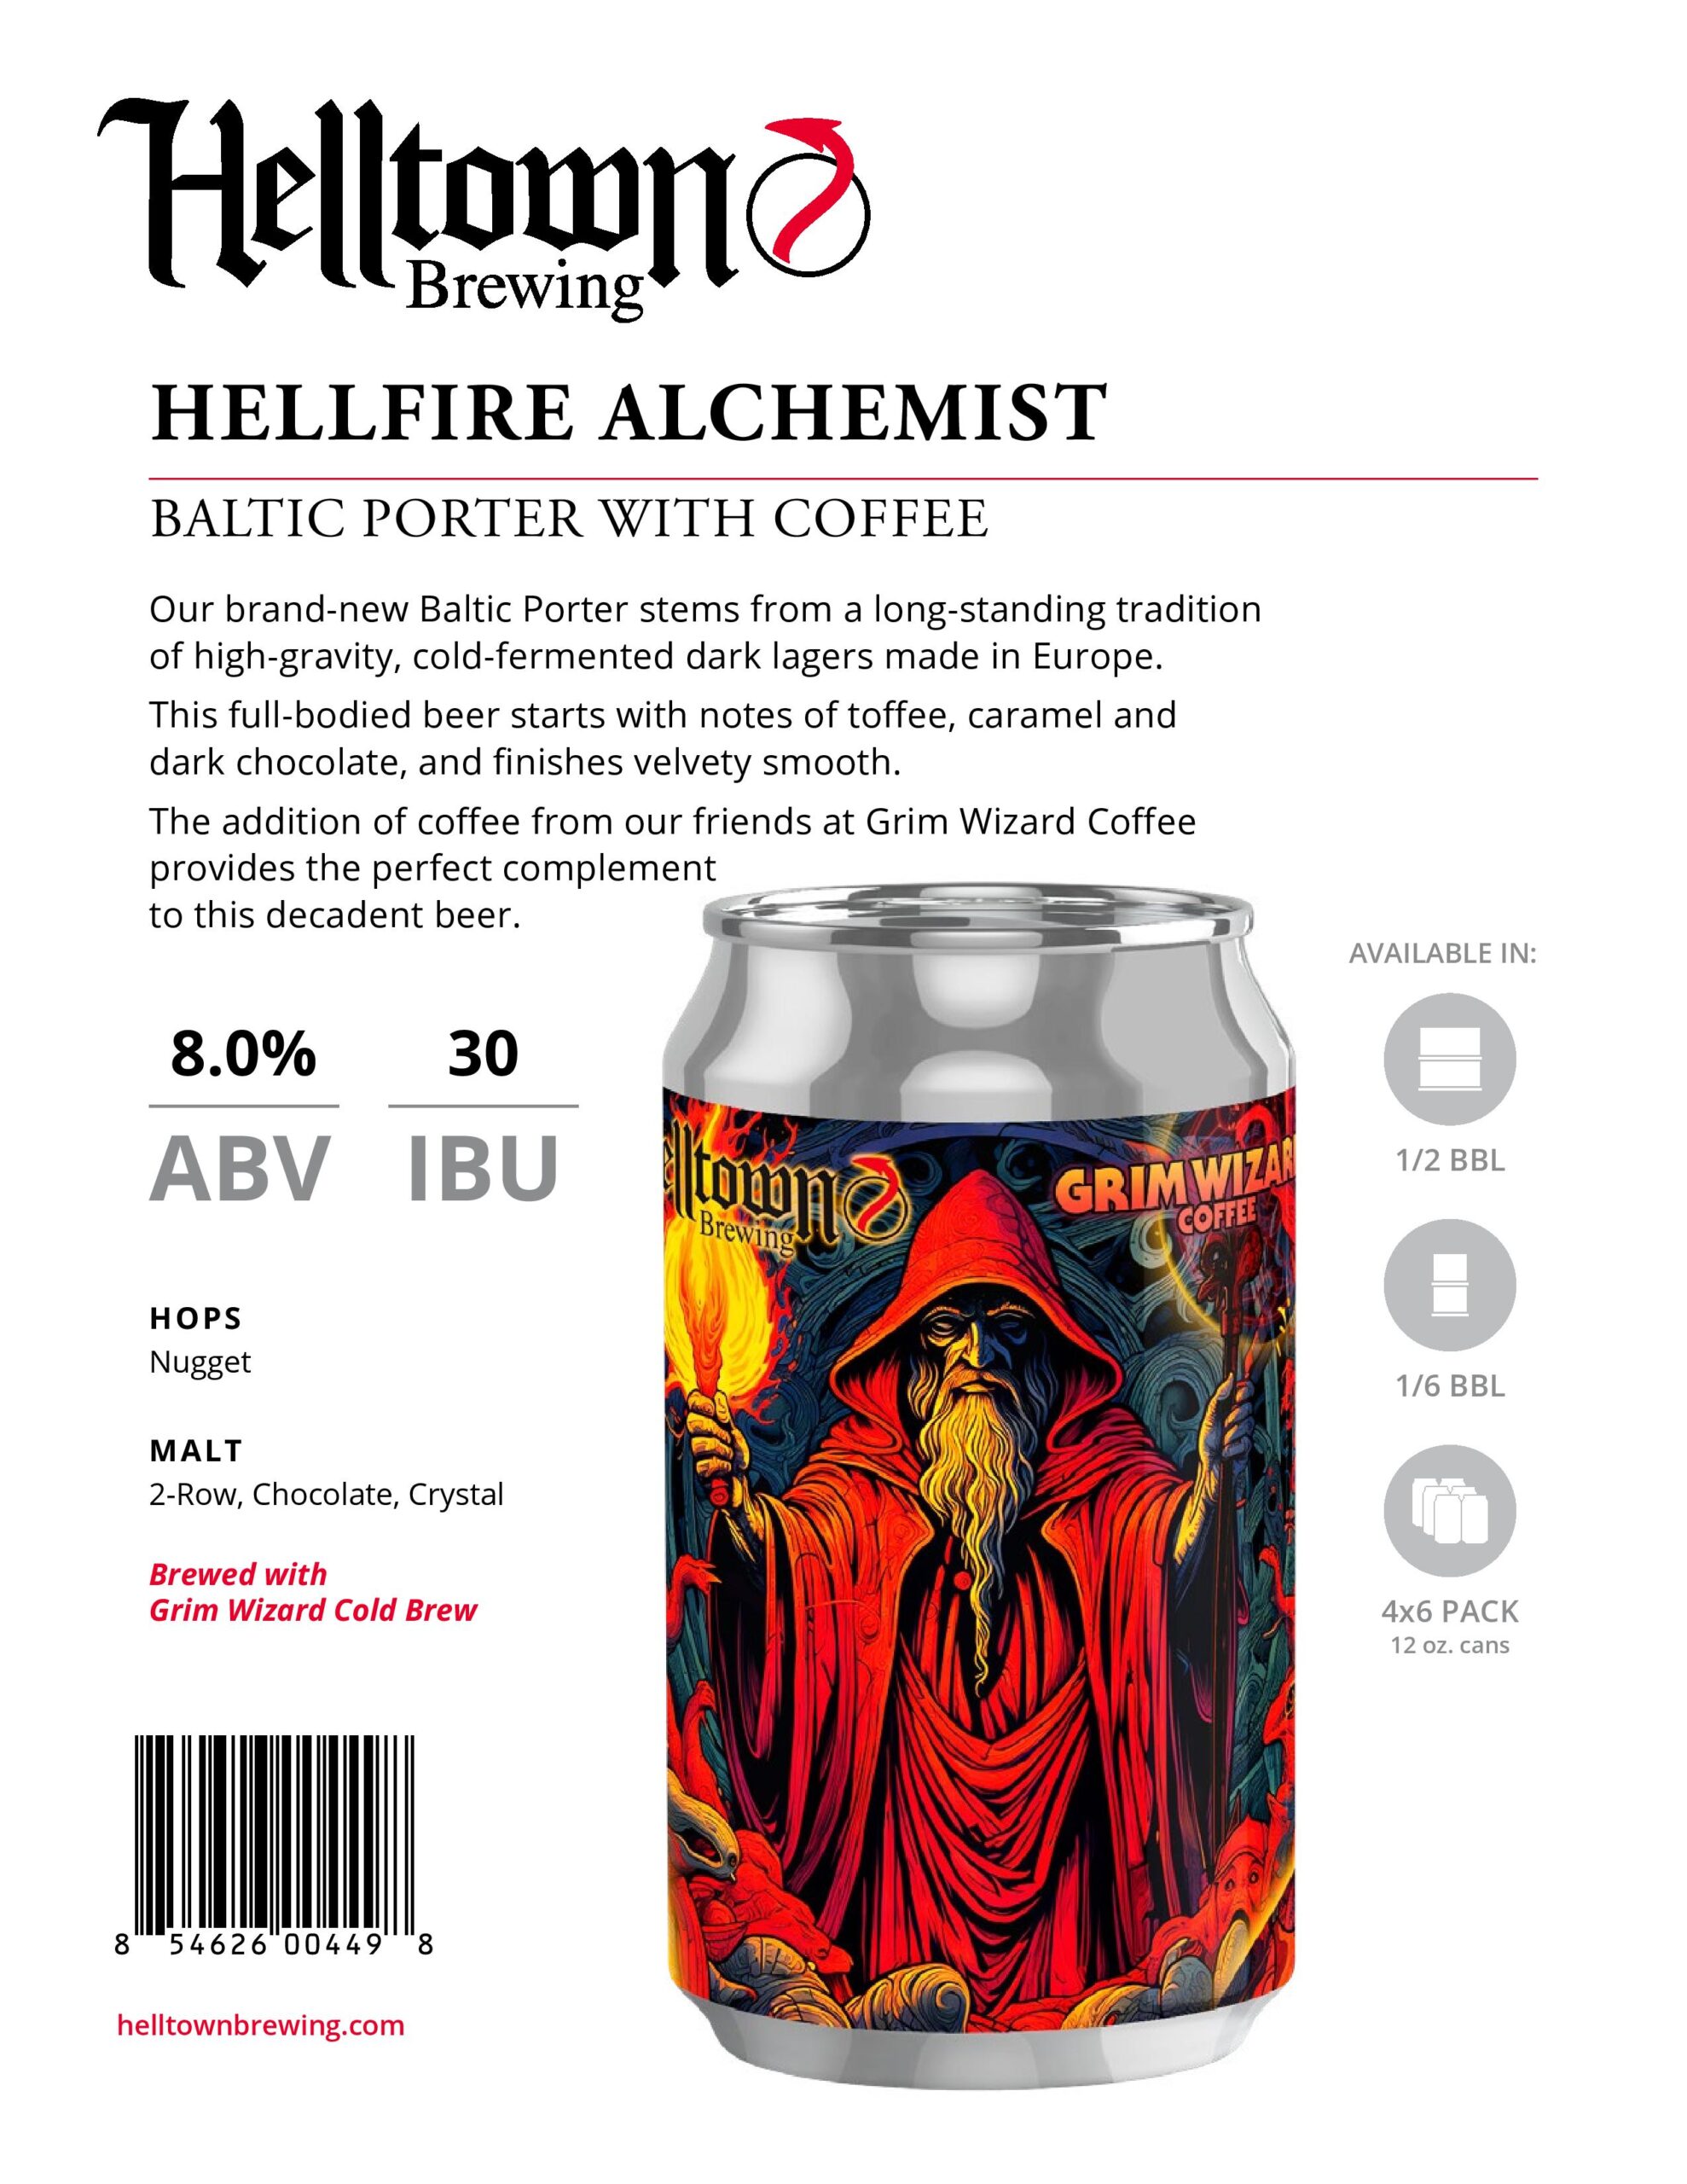 January Release - Hellfire Alchemist - Coffee Baltic Porter